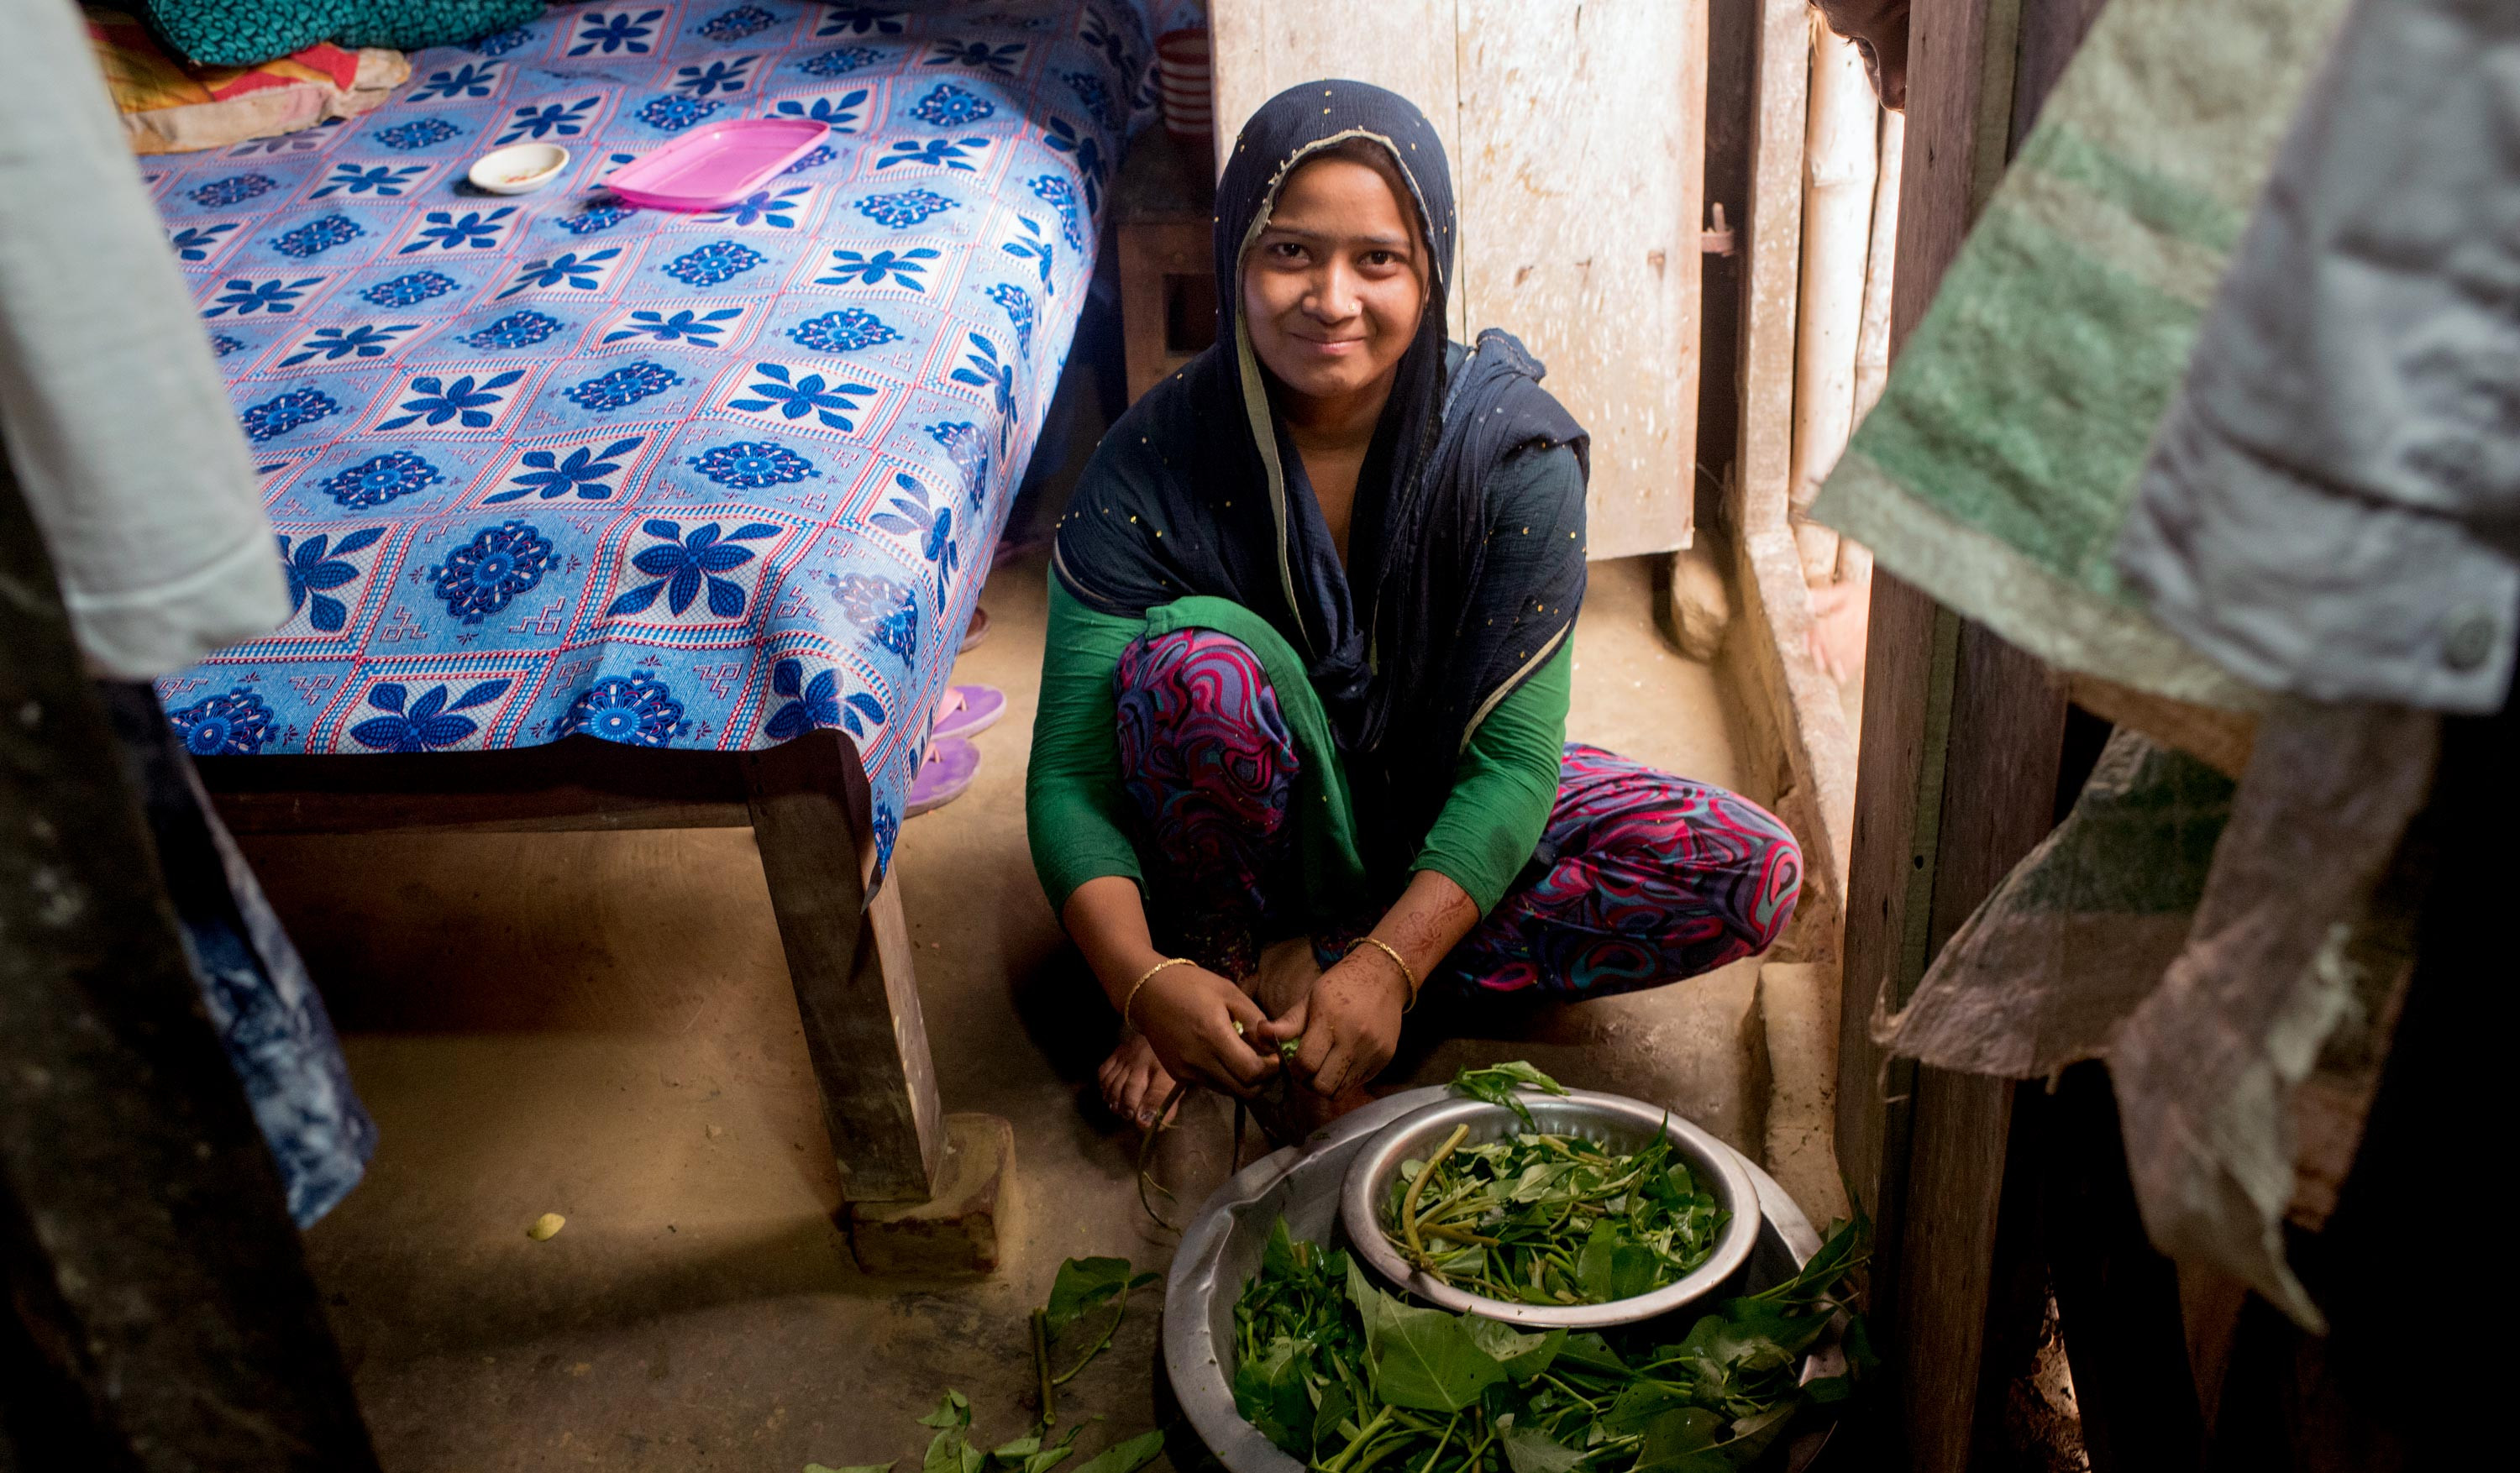 A Bangladeshi woman cuts vegetables inside her home.